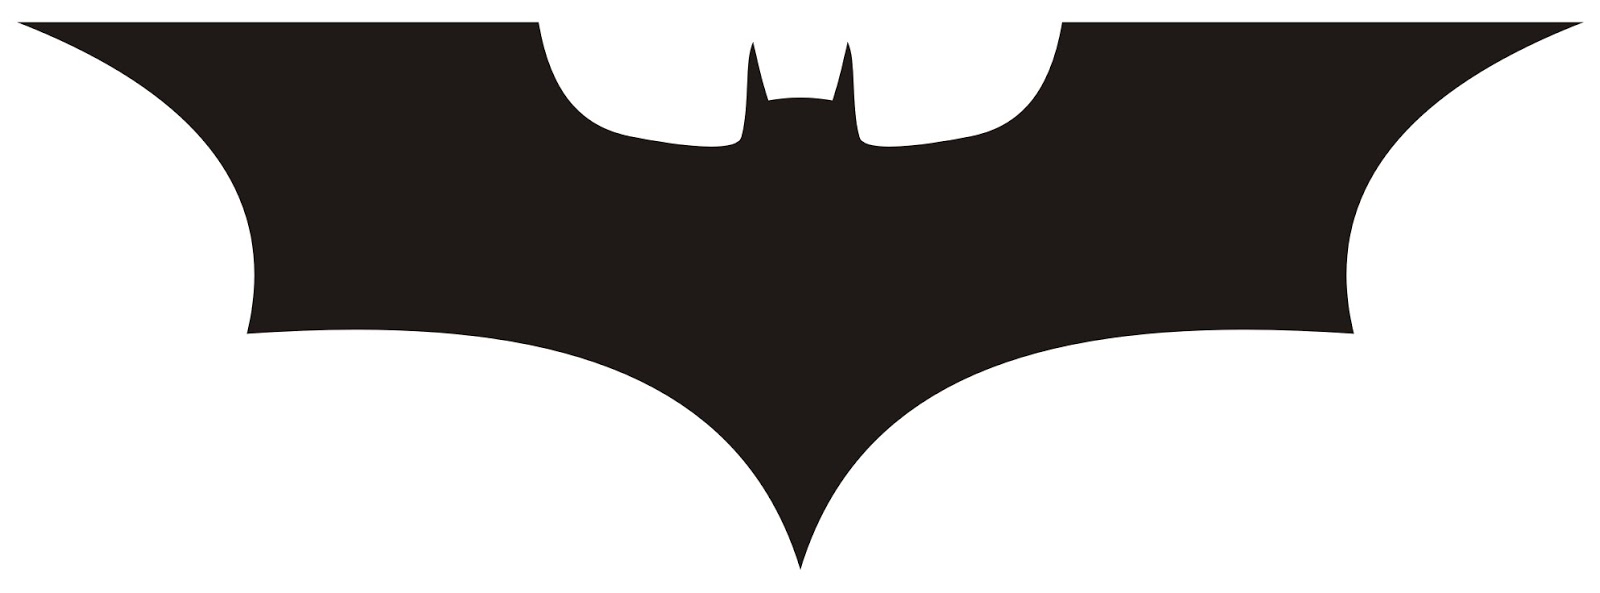 Free Batman Logo Images, Download Free Batman Logo Images png images ...